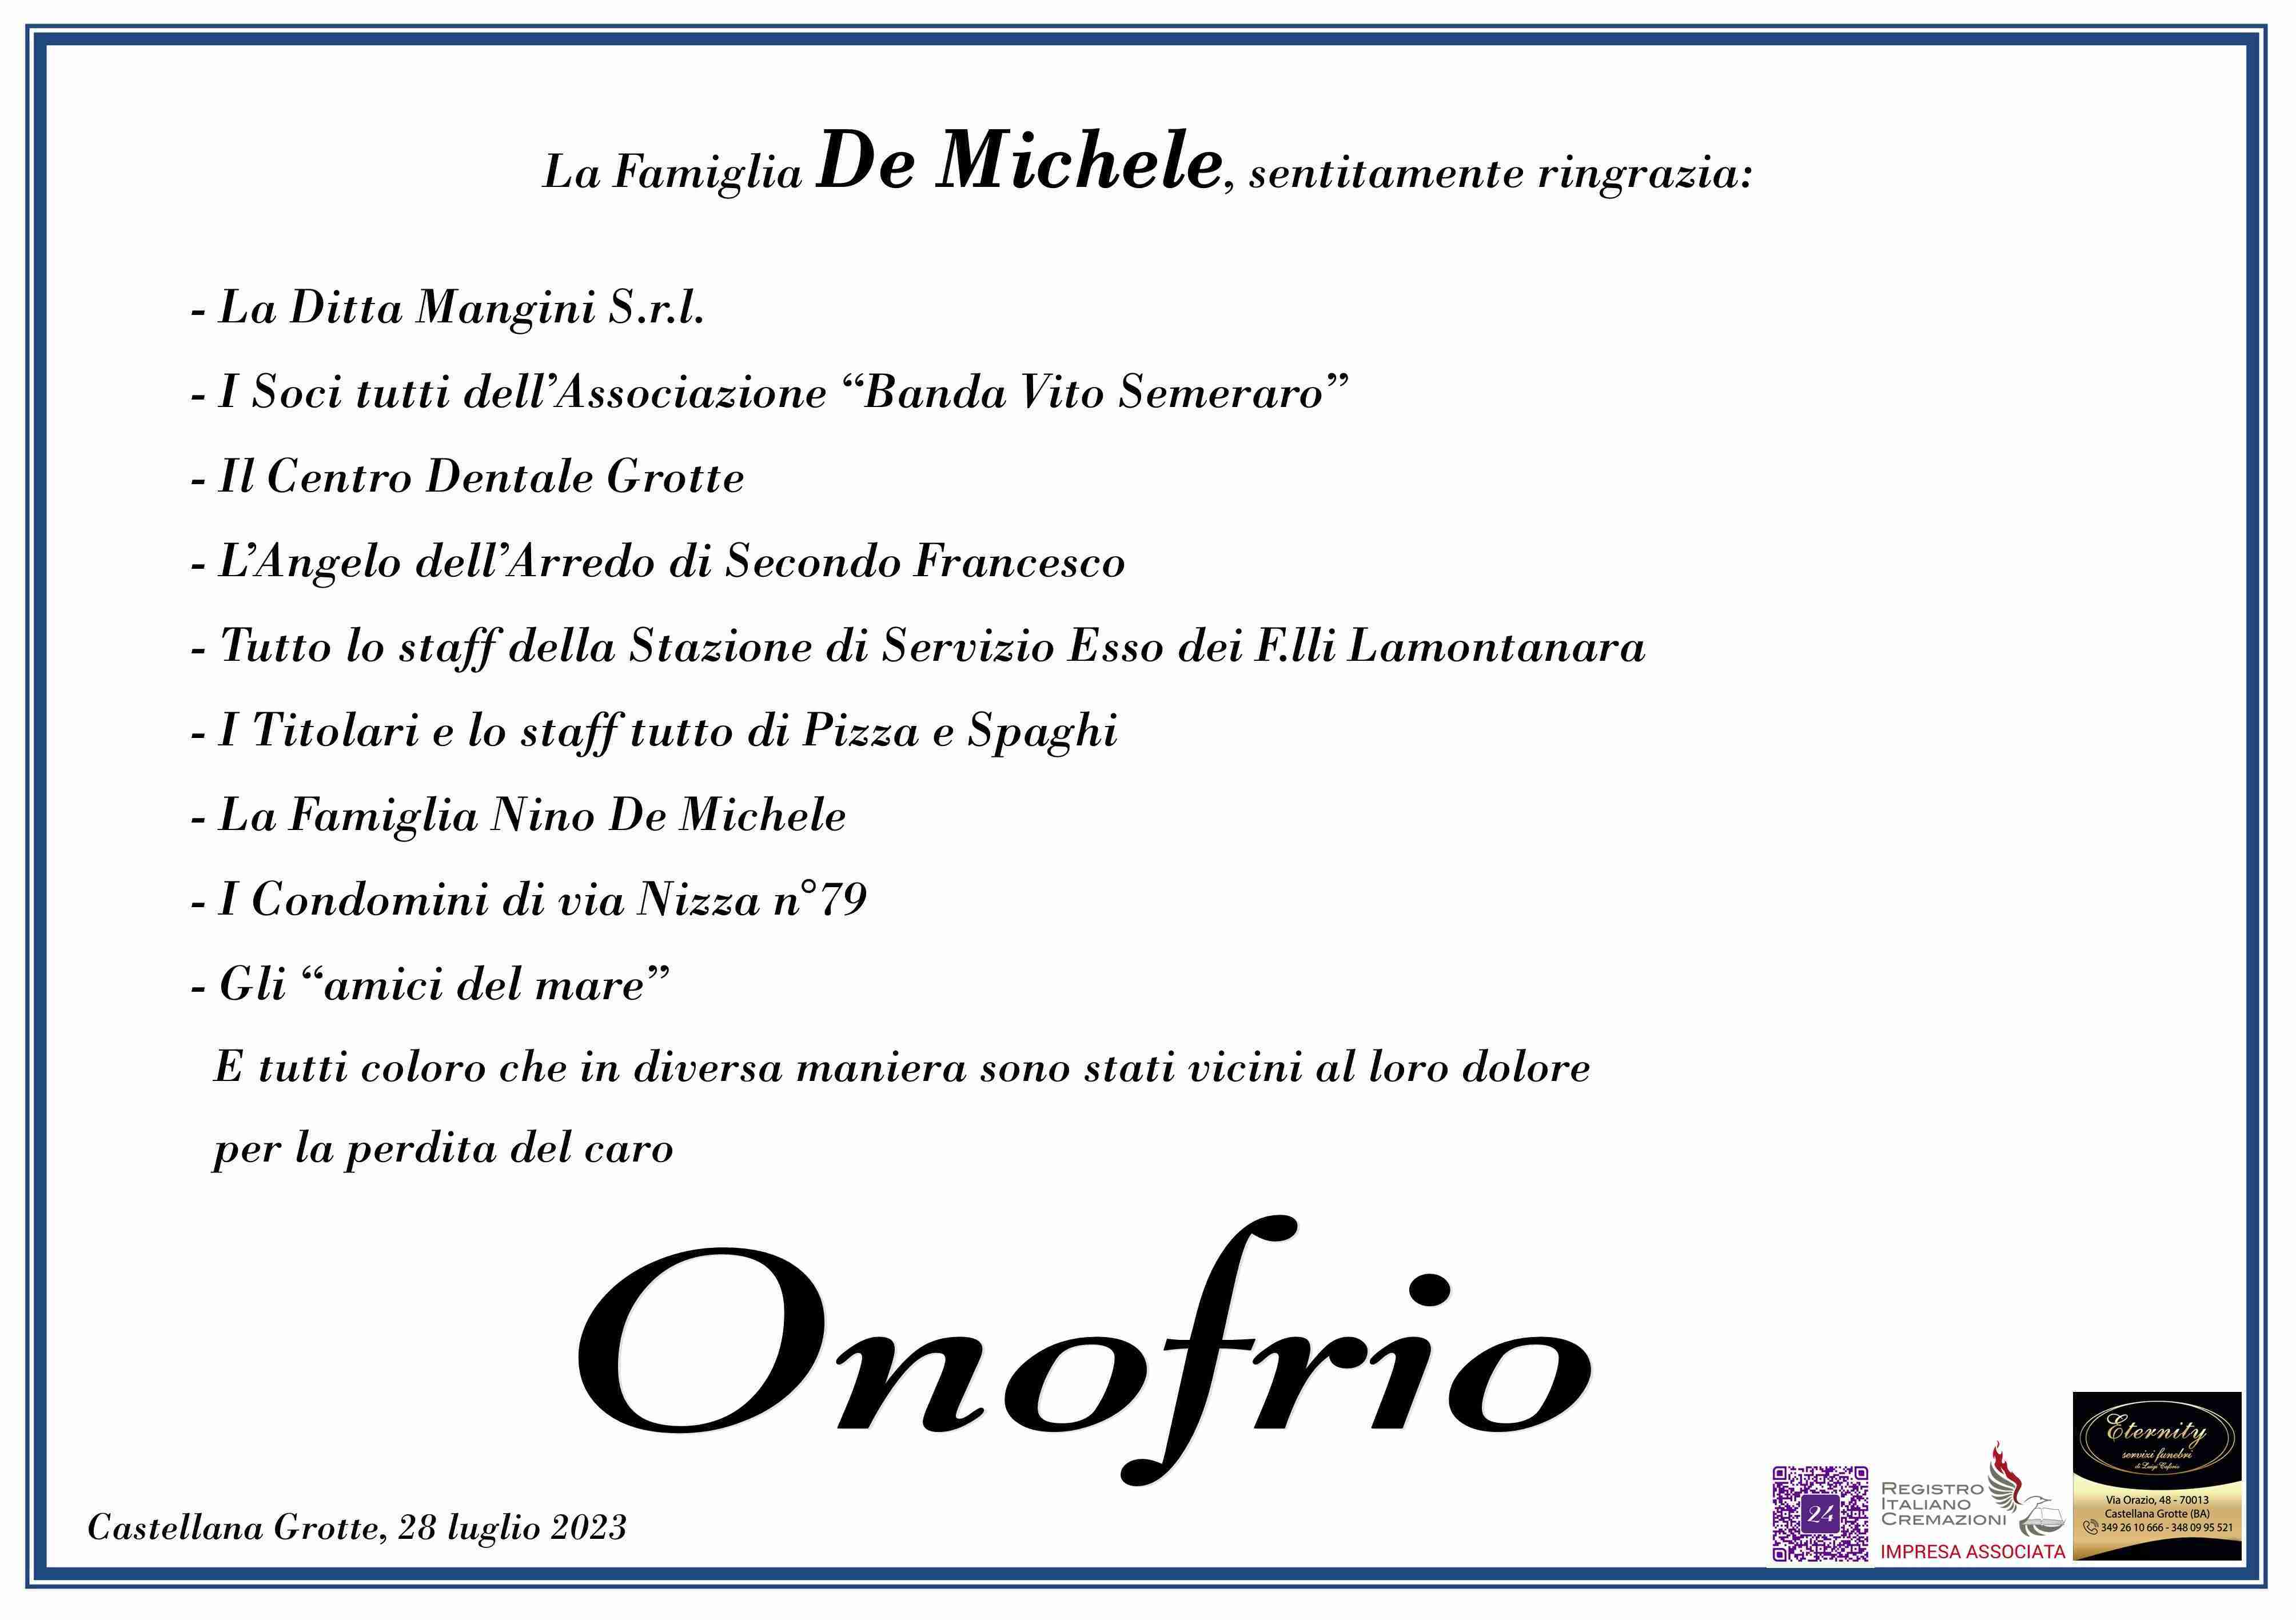 Onofrio De Michele